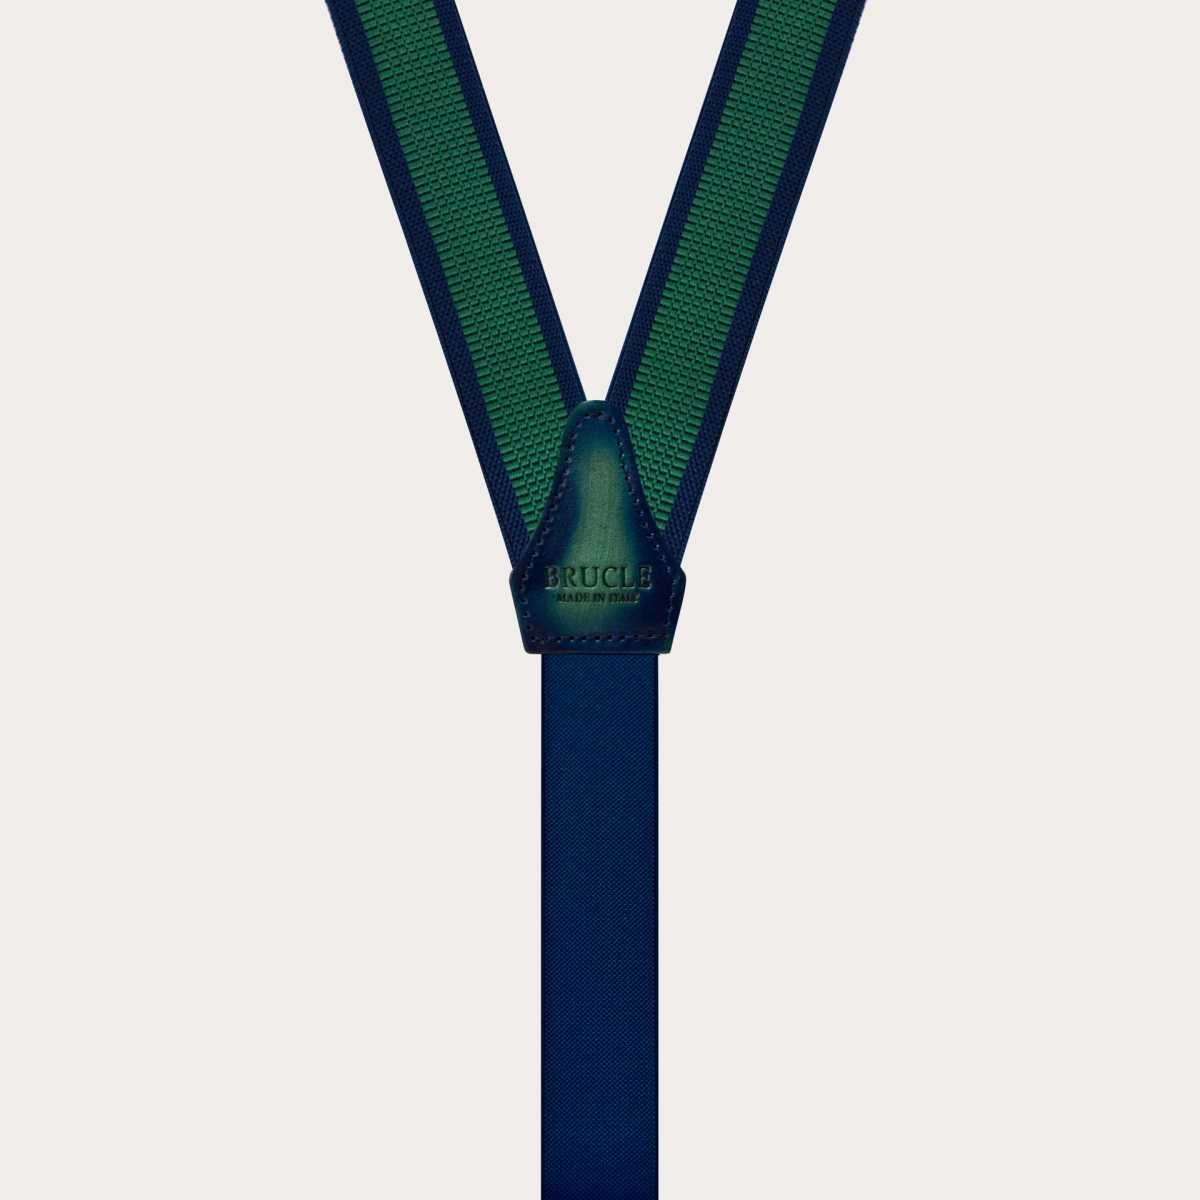 BRUCLE Dünne, nickelfreie Unisex-Hosenträger, grün und blau